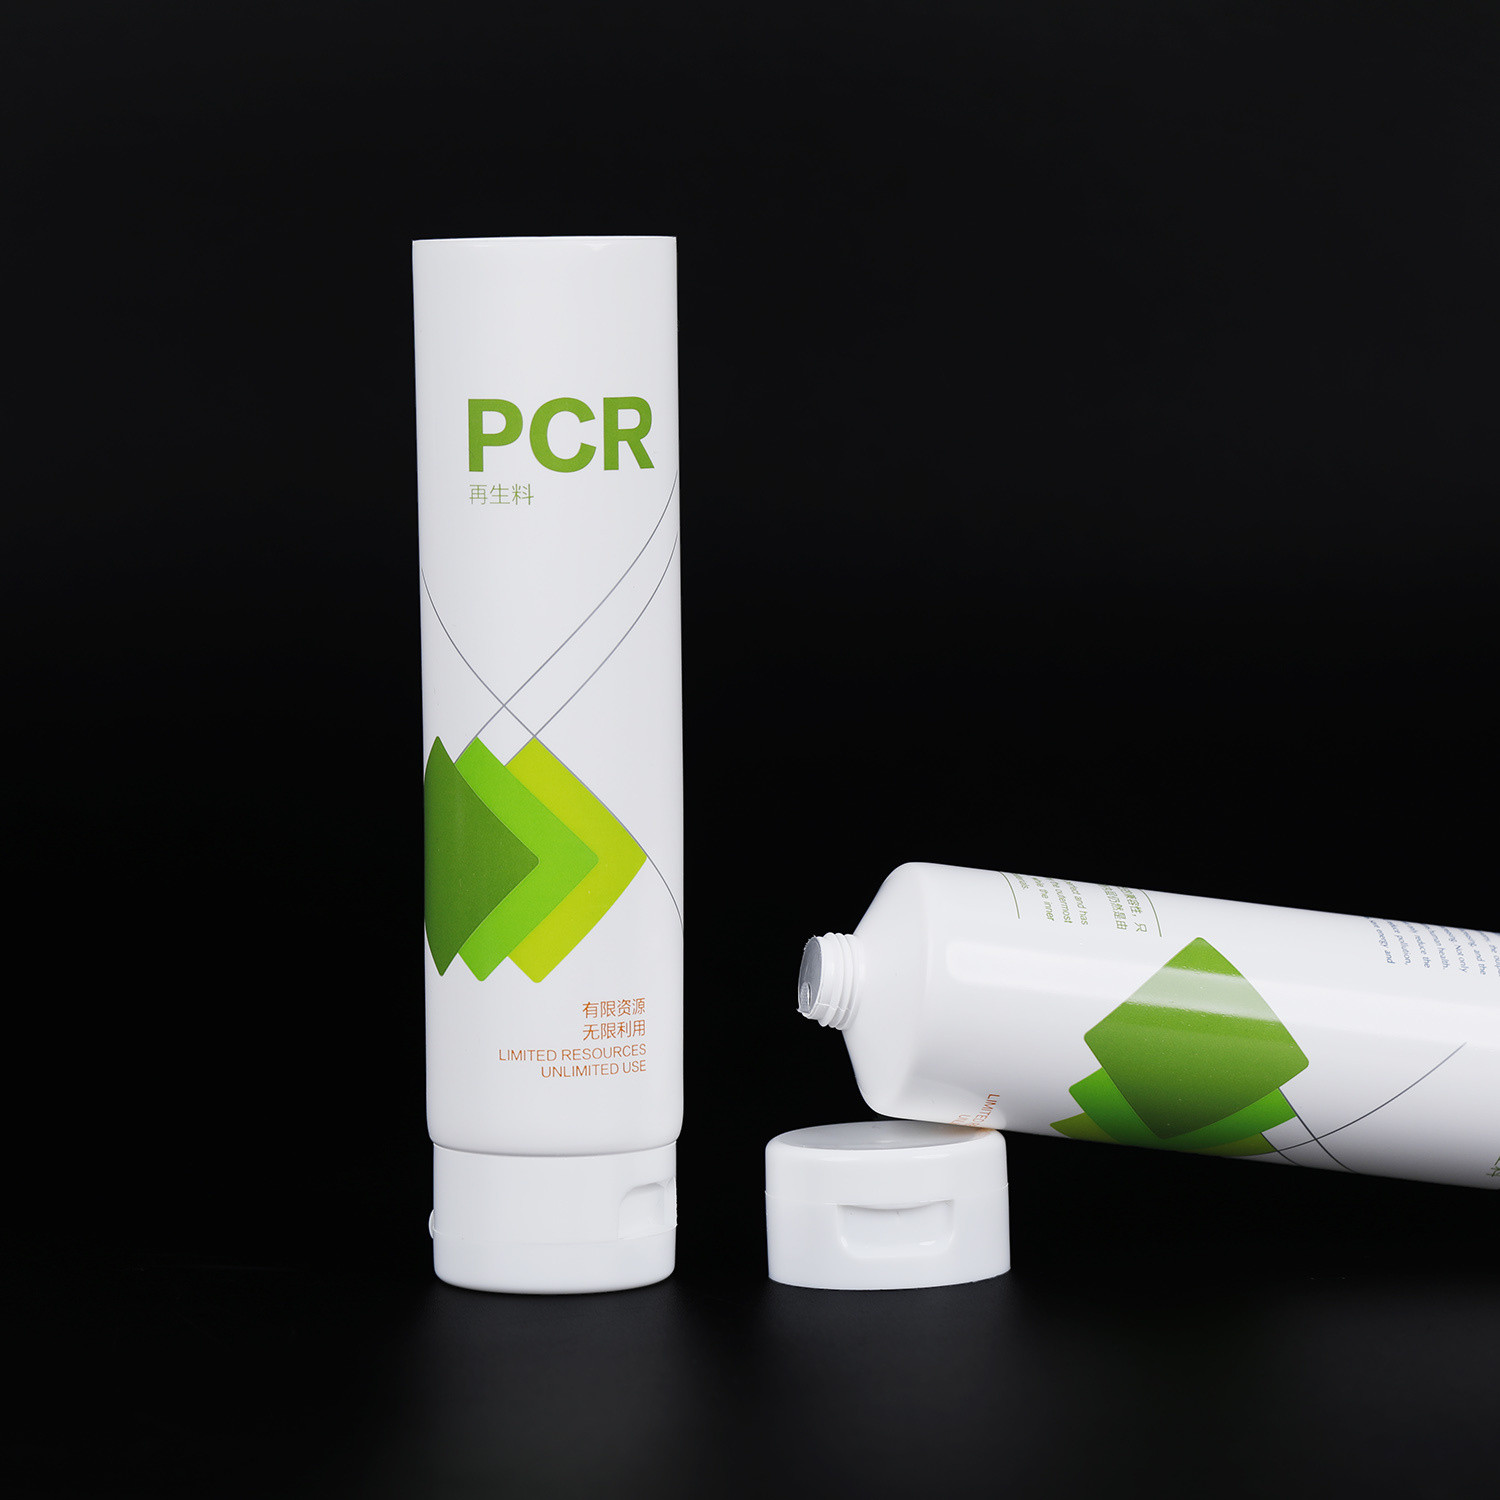 100ml Plastic Cosmetic Packaging Tube Skin Care Hand Cream Plastic Cosmetic Tube Packaging